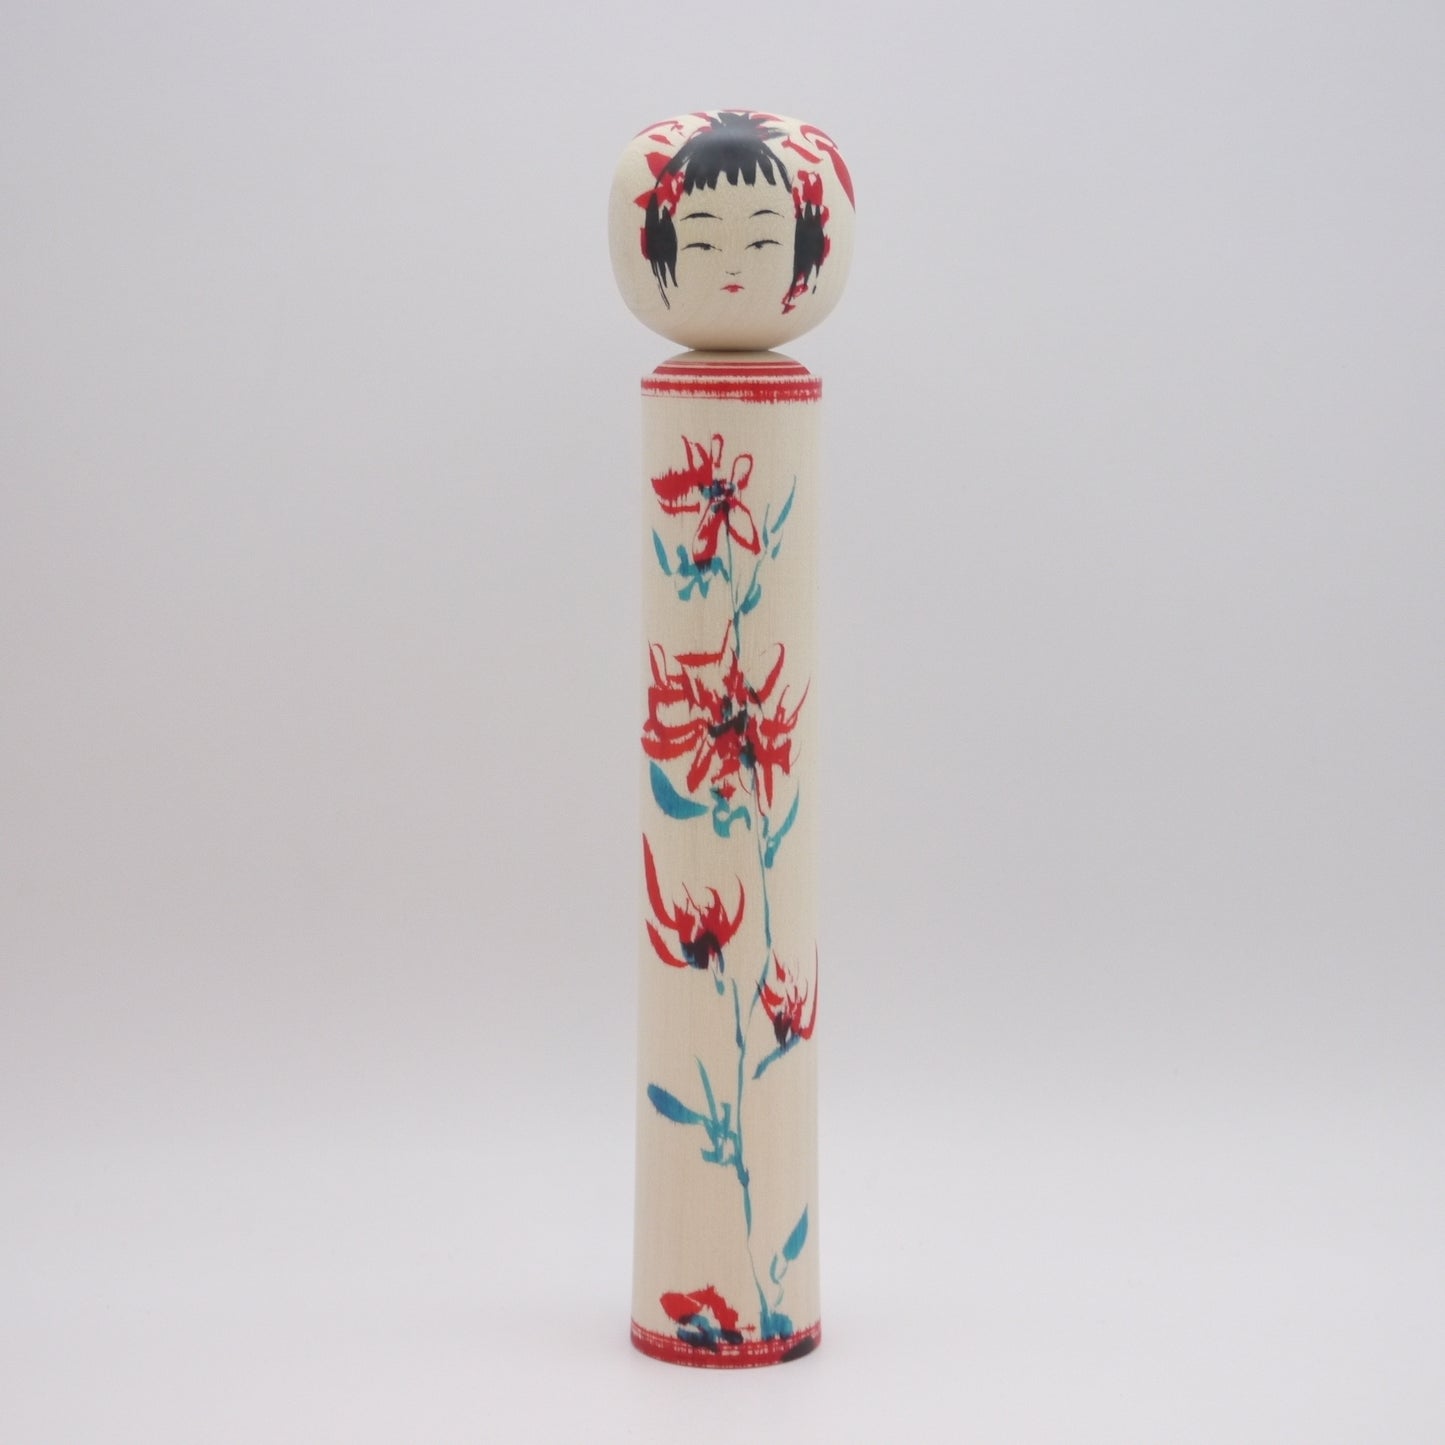 19cm Kokeshi doll by Tomohiro Matsuda